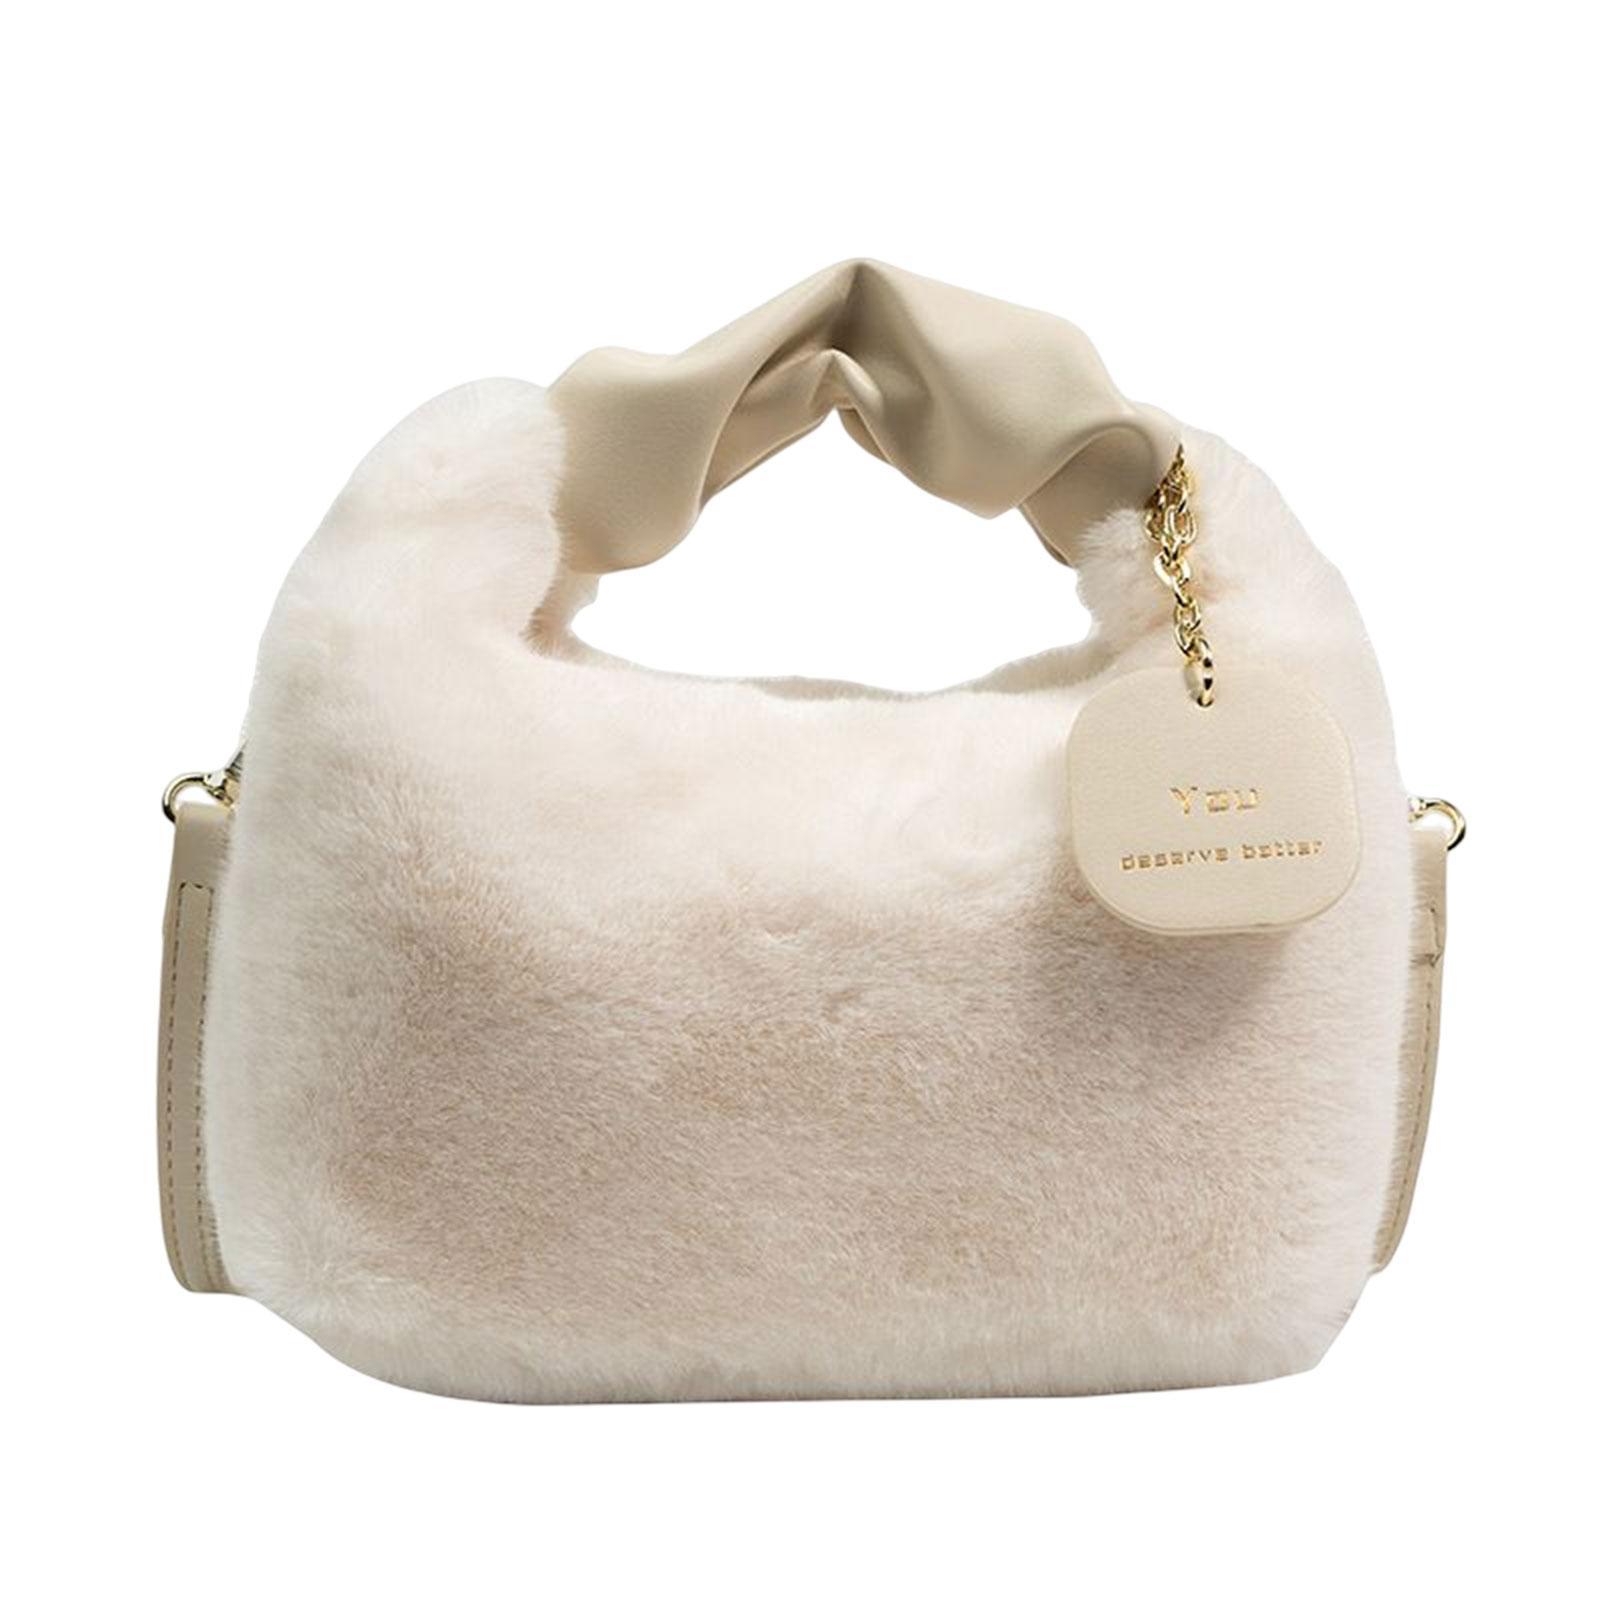 Woman Soft Plush Handbag Shoulder Bag Tote for Vacation Traveling Shopping